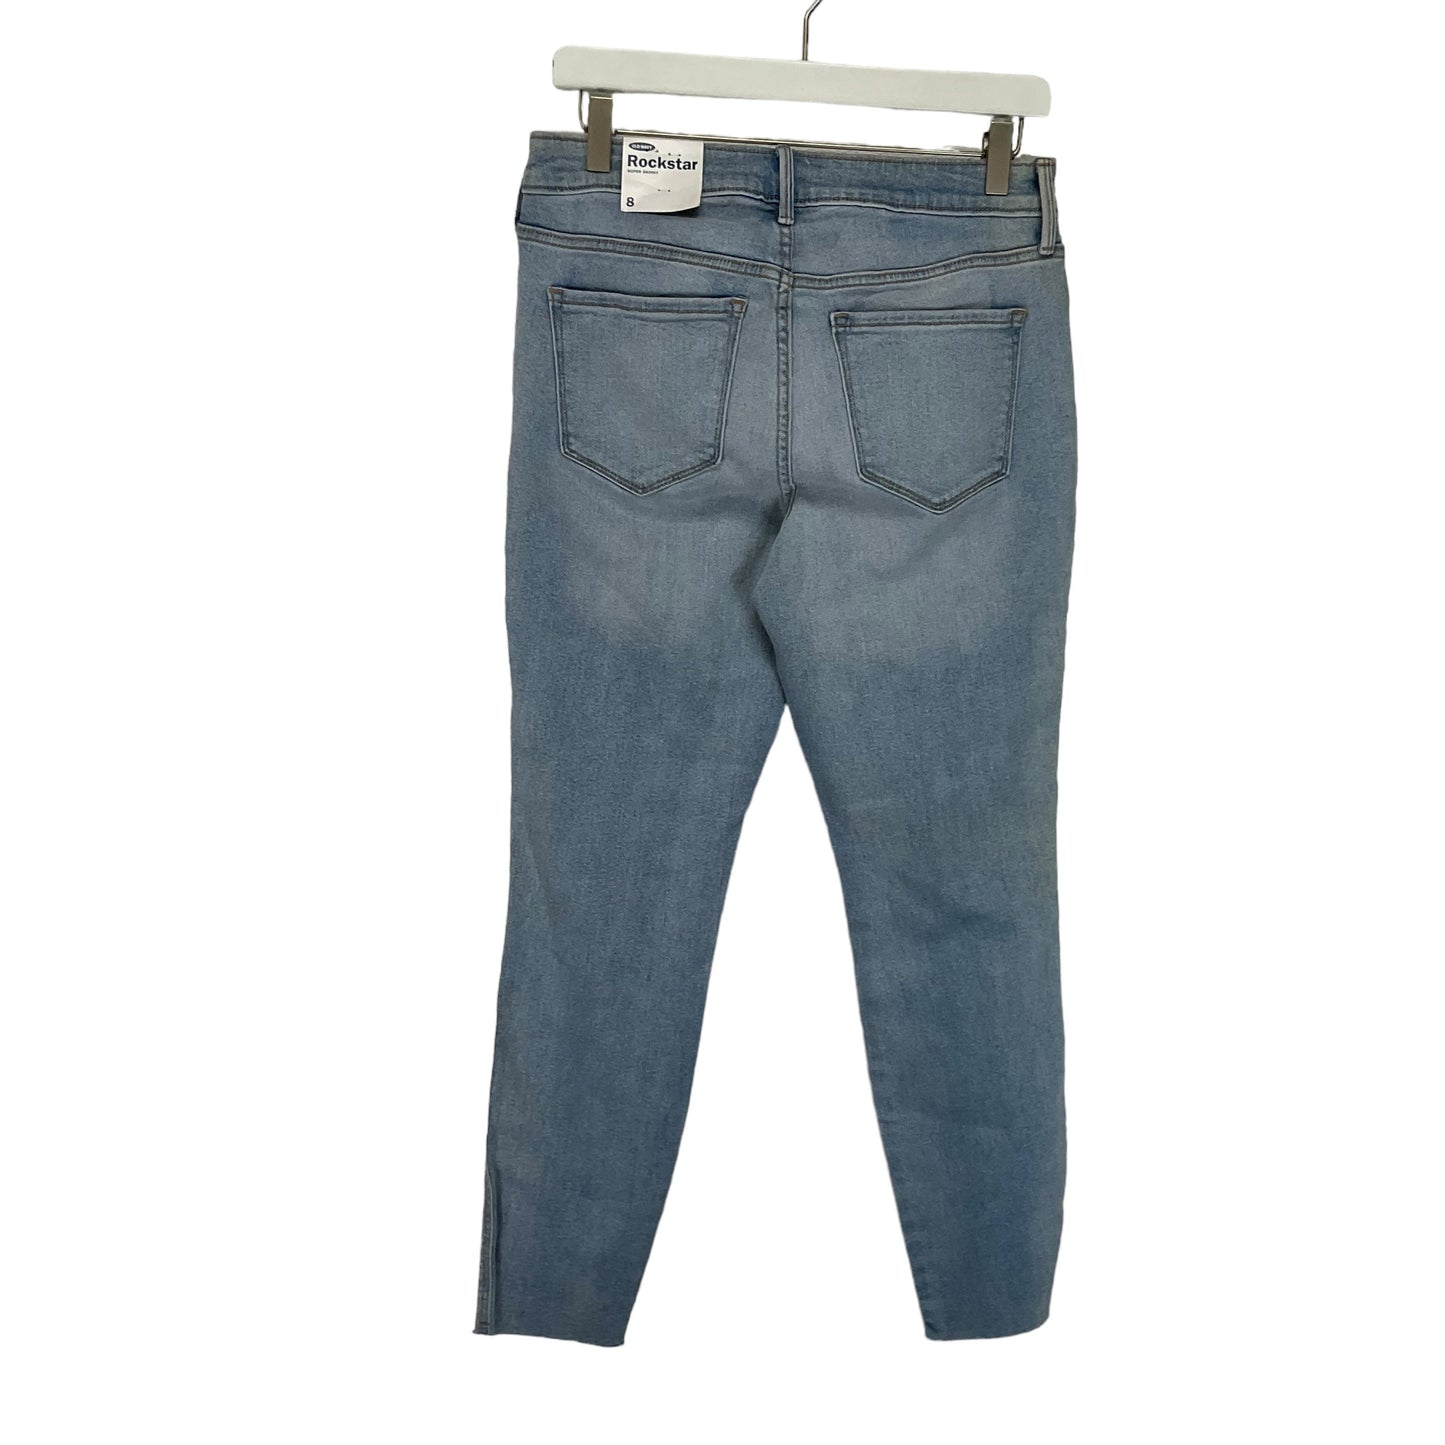 Blue Denim Jeans Straight Old Navy, Size 8